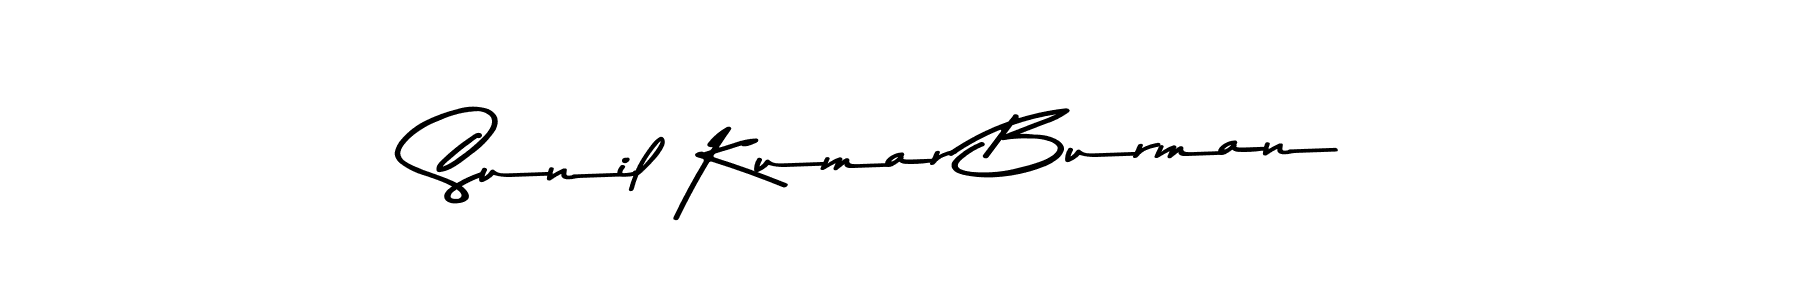 Make a beautiful signature design for name Sunil Kumar Burman. Use this online signature maker to create a handwritten signature for free. Sunil Kumar Burman signature style 9 images and pictures png